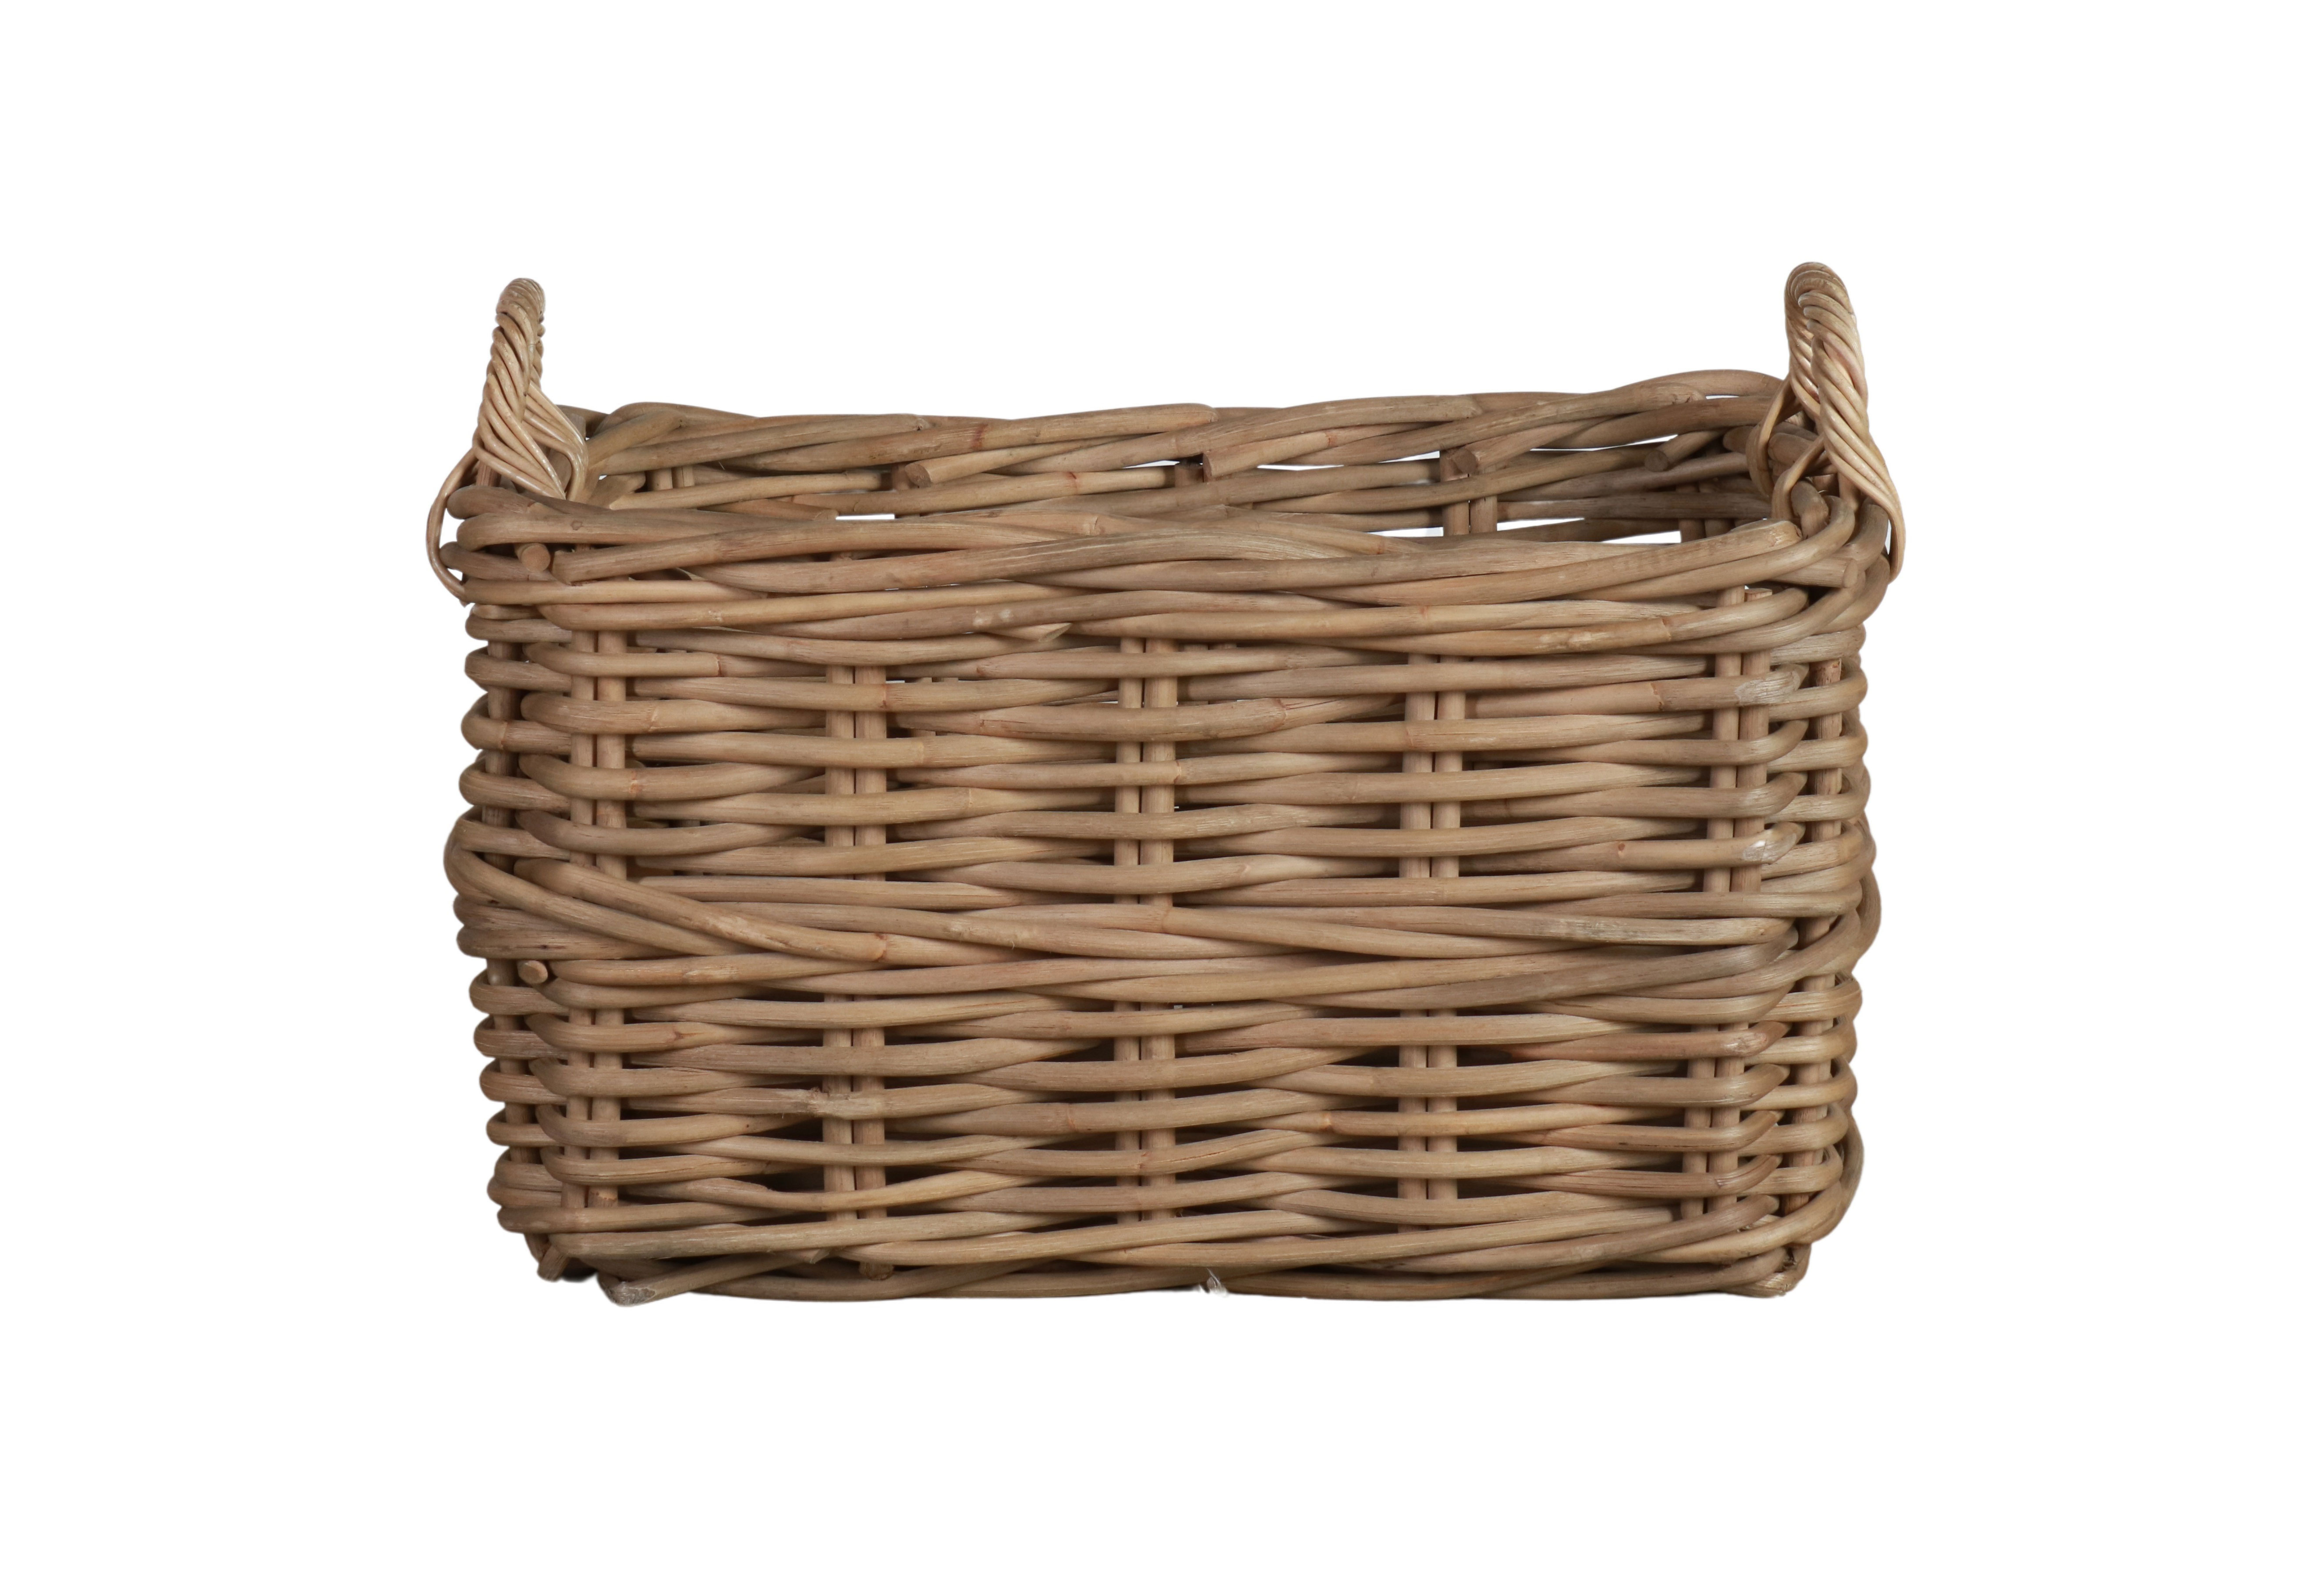 Kubu weave rectangular basket with wicker handles.